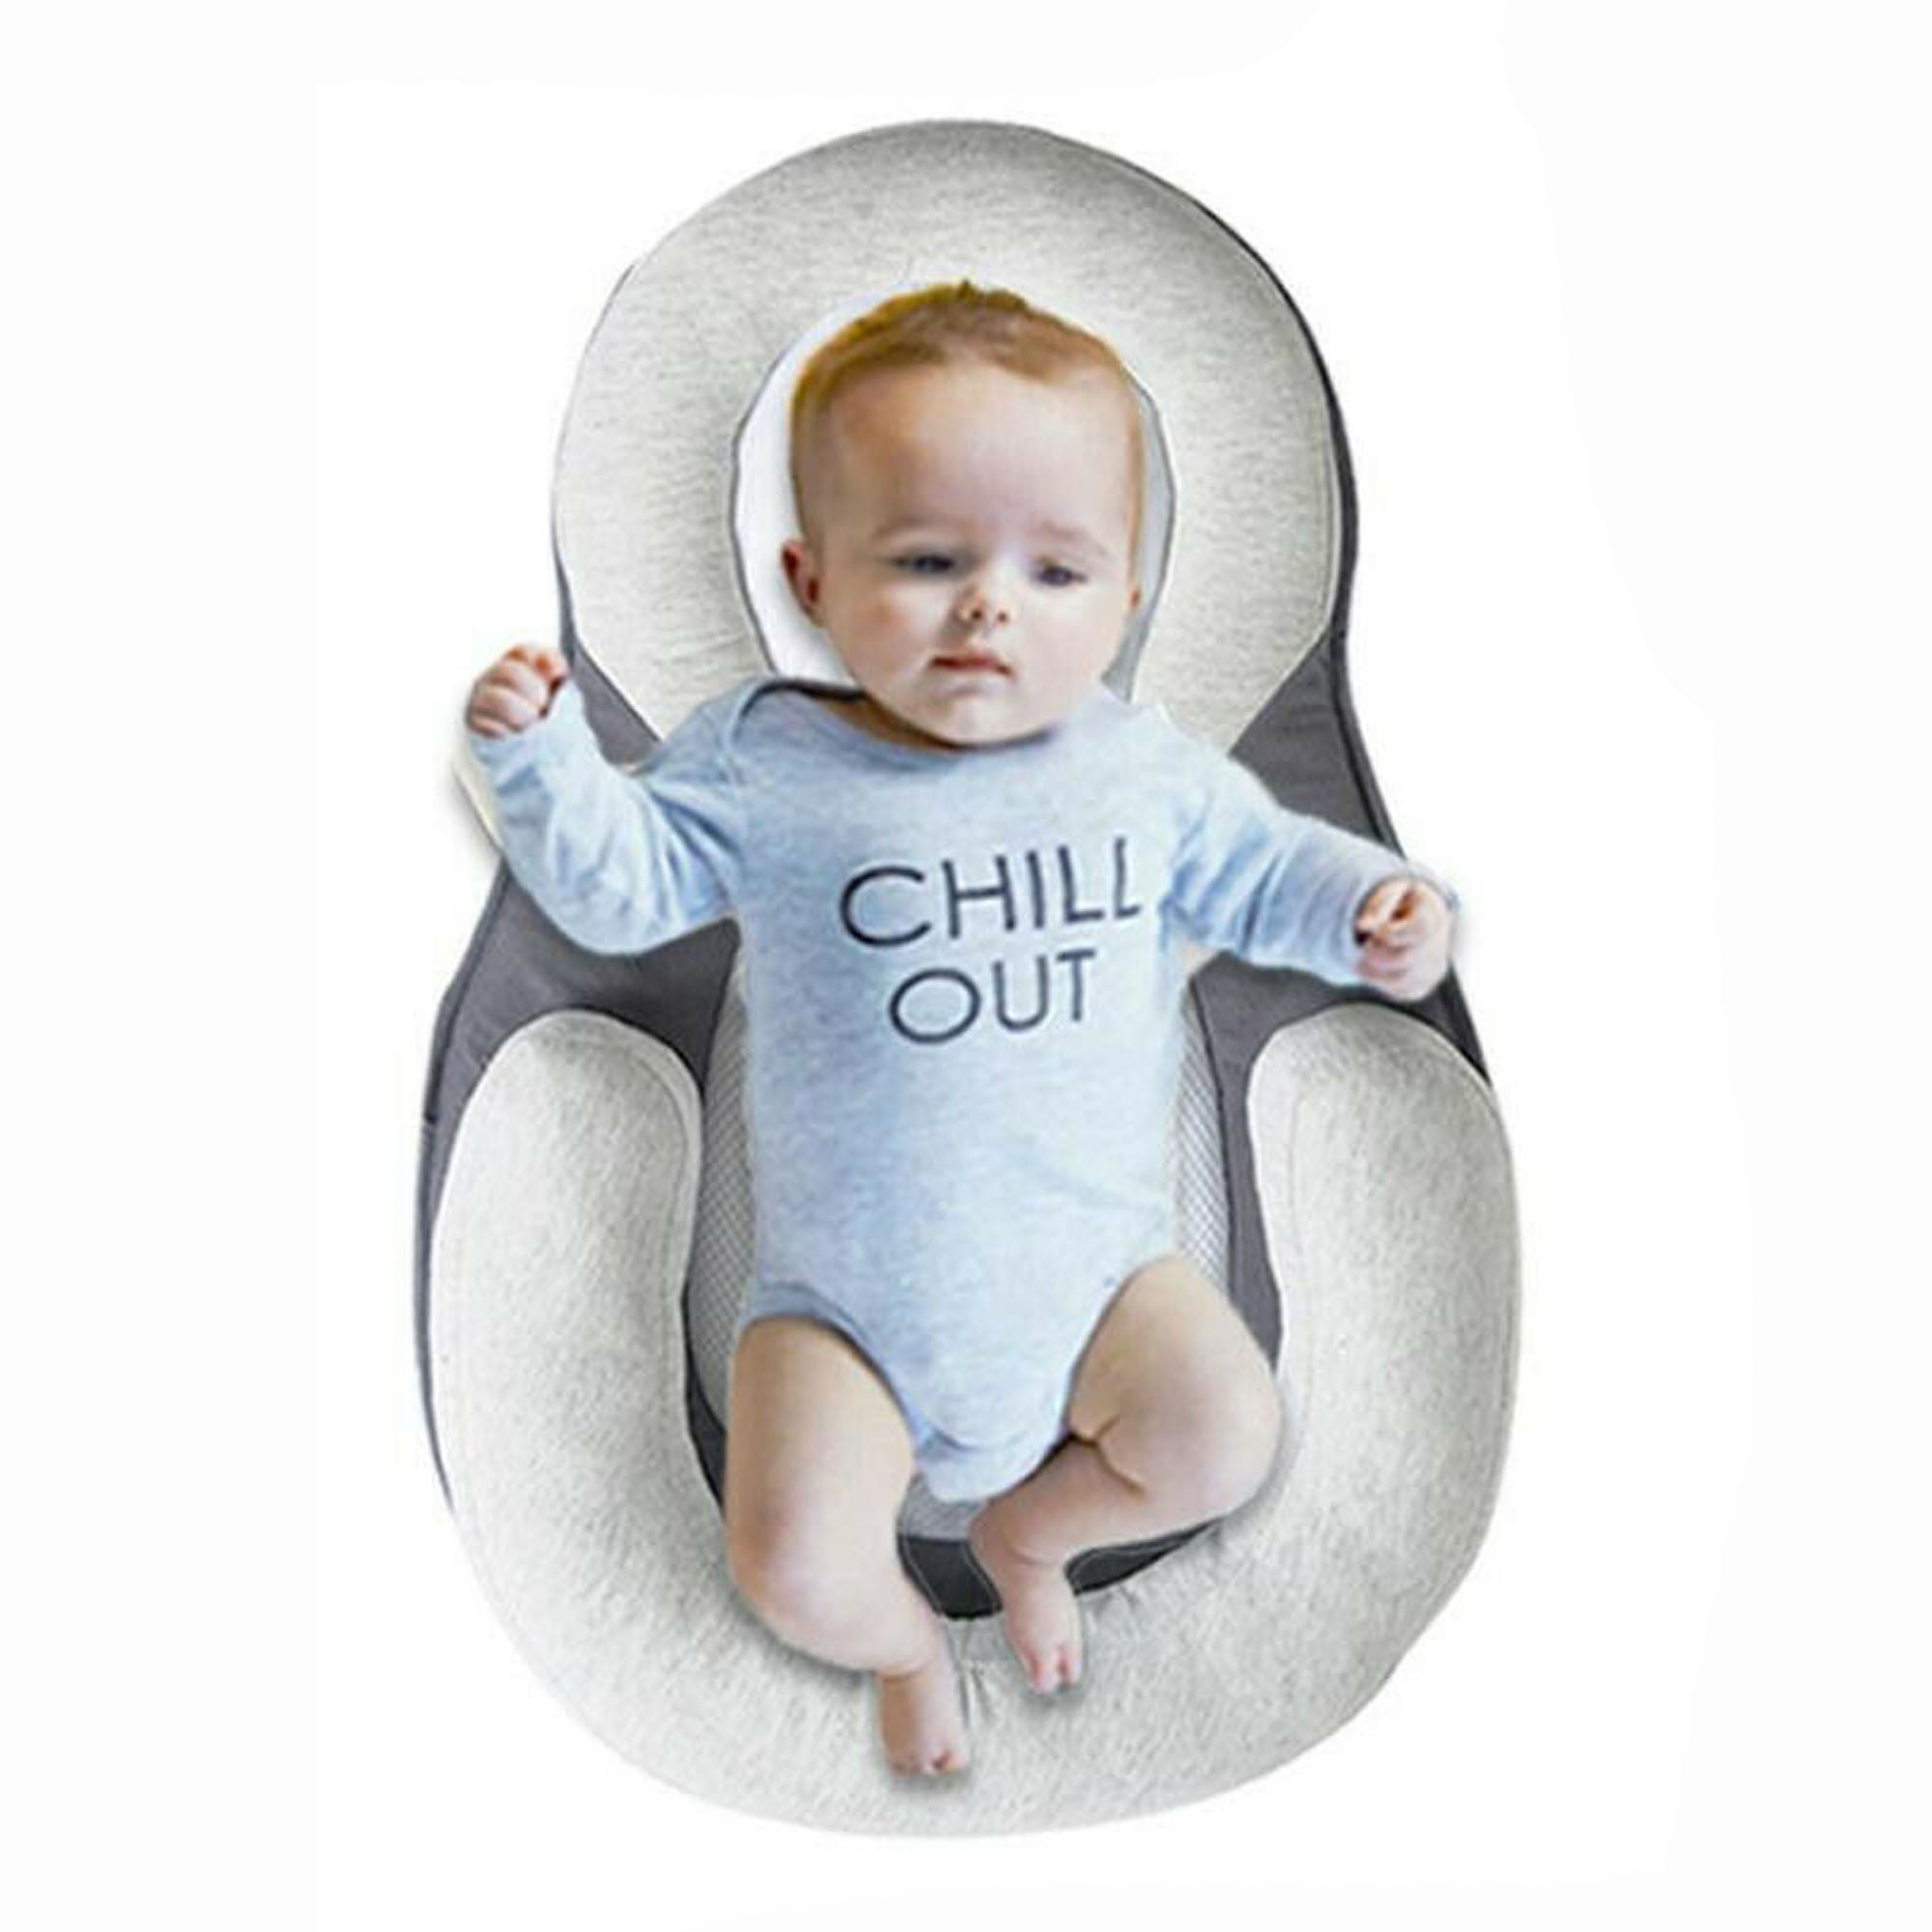 Infant Newborn Baby Pillow Cushion Prevent Flat Head Sleep Nest Pod Anti Roll 7B 